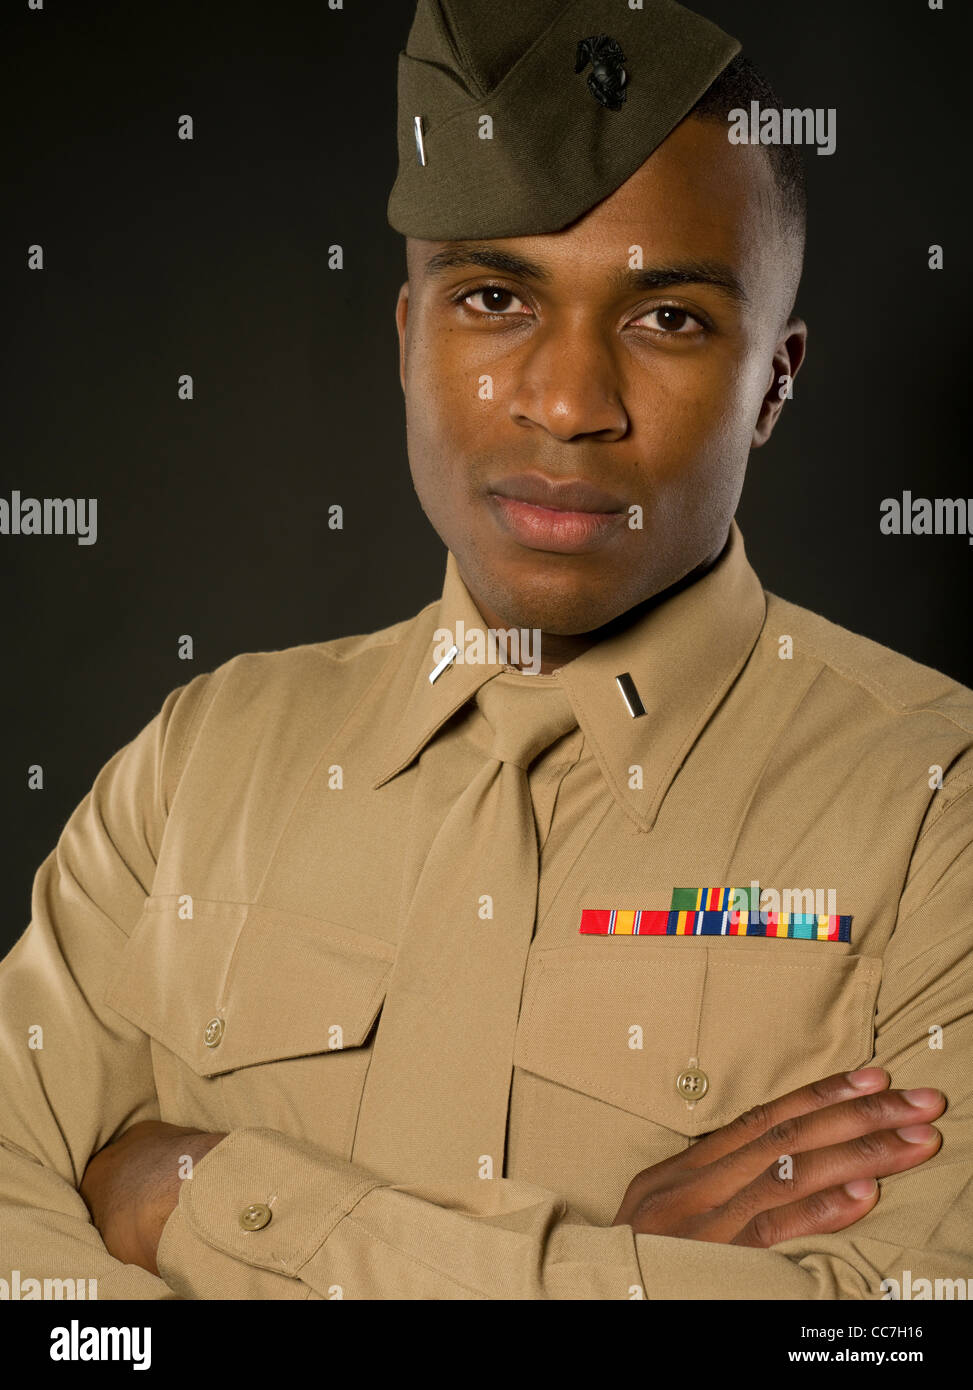 United States Marine Corps Officer In Service B Bravos Uniform